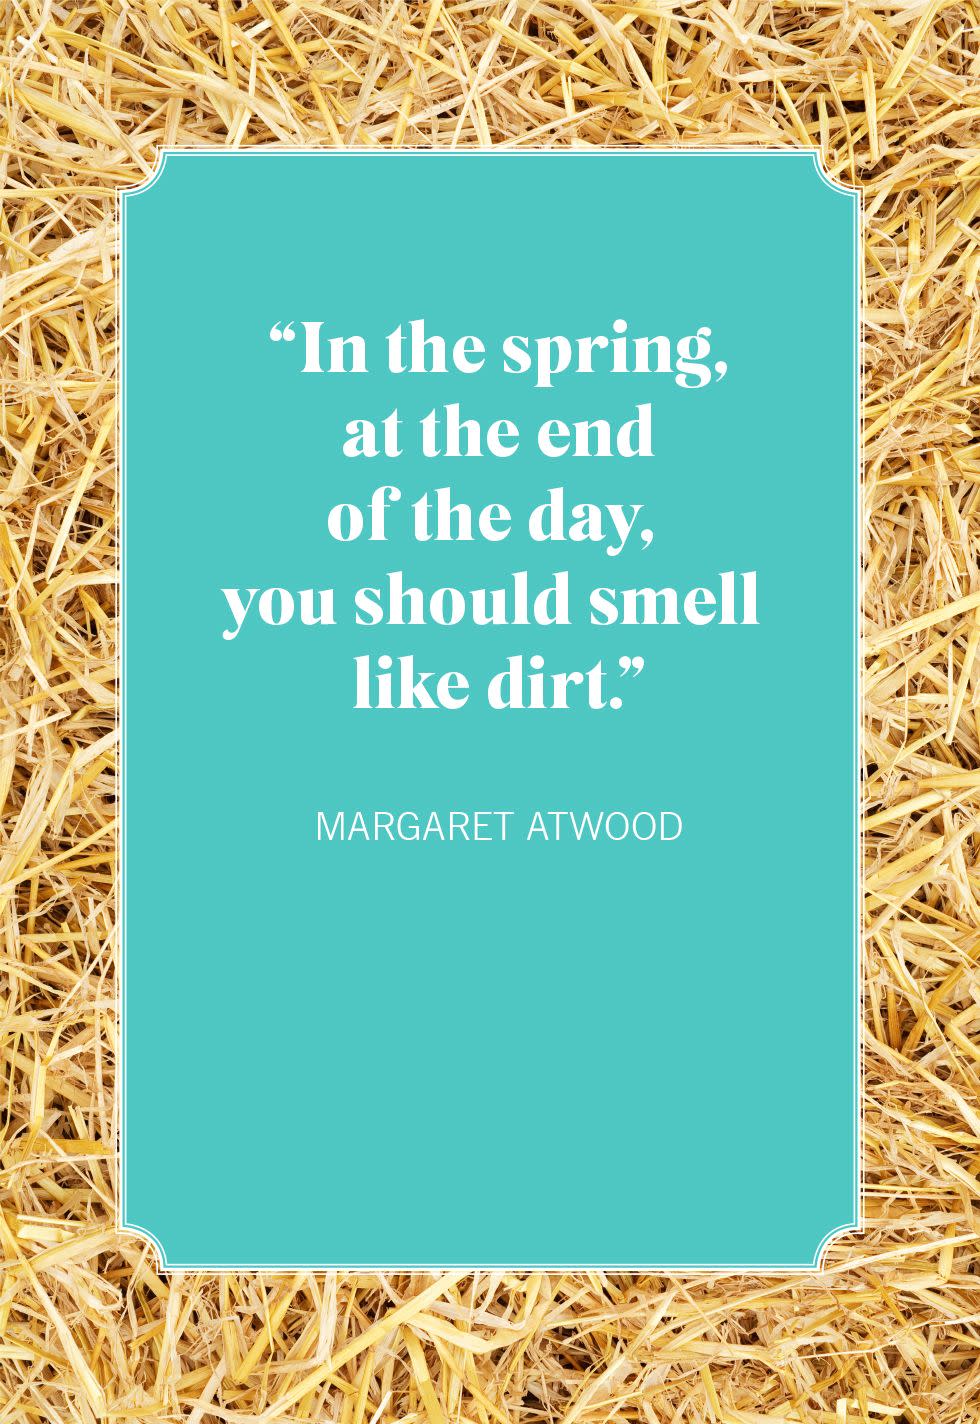 margaret atwood nature quotes